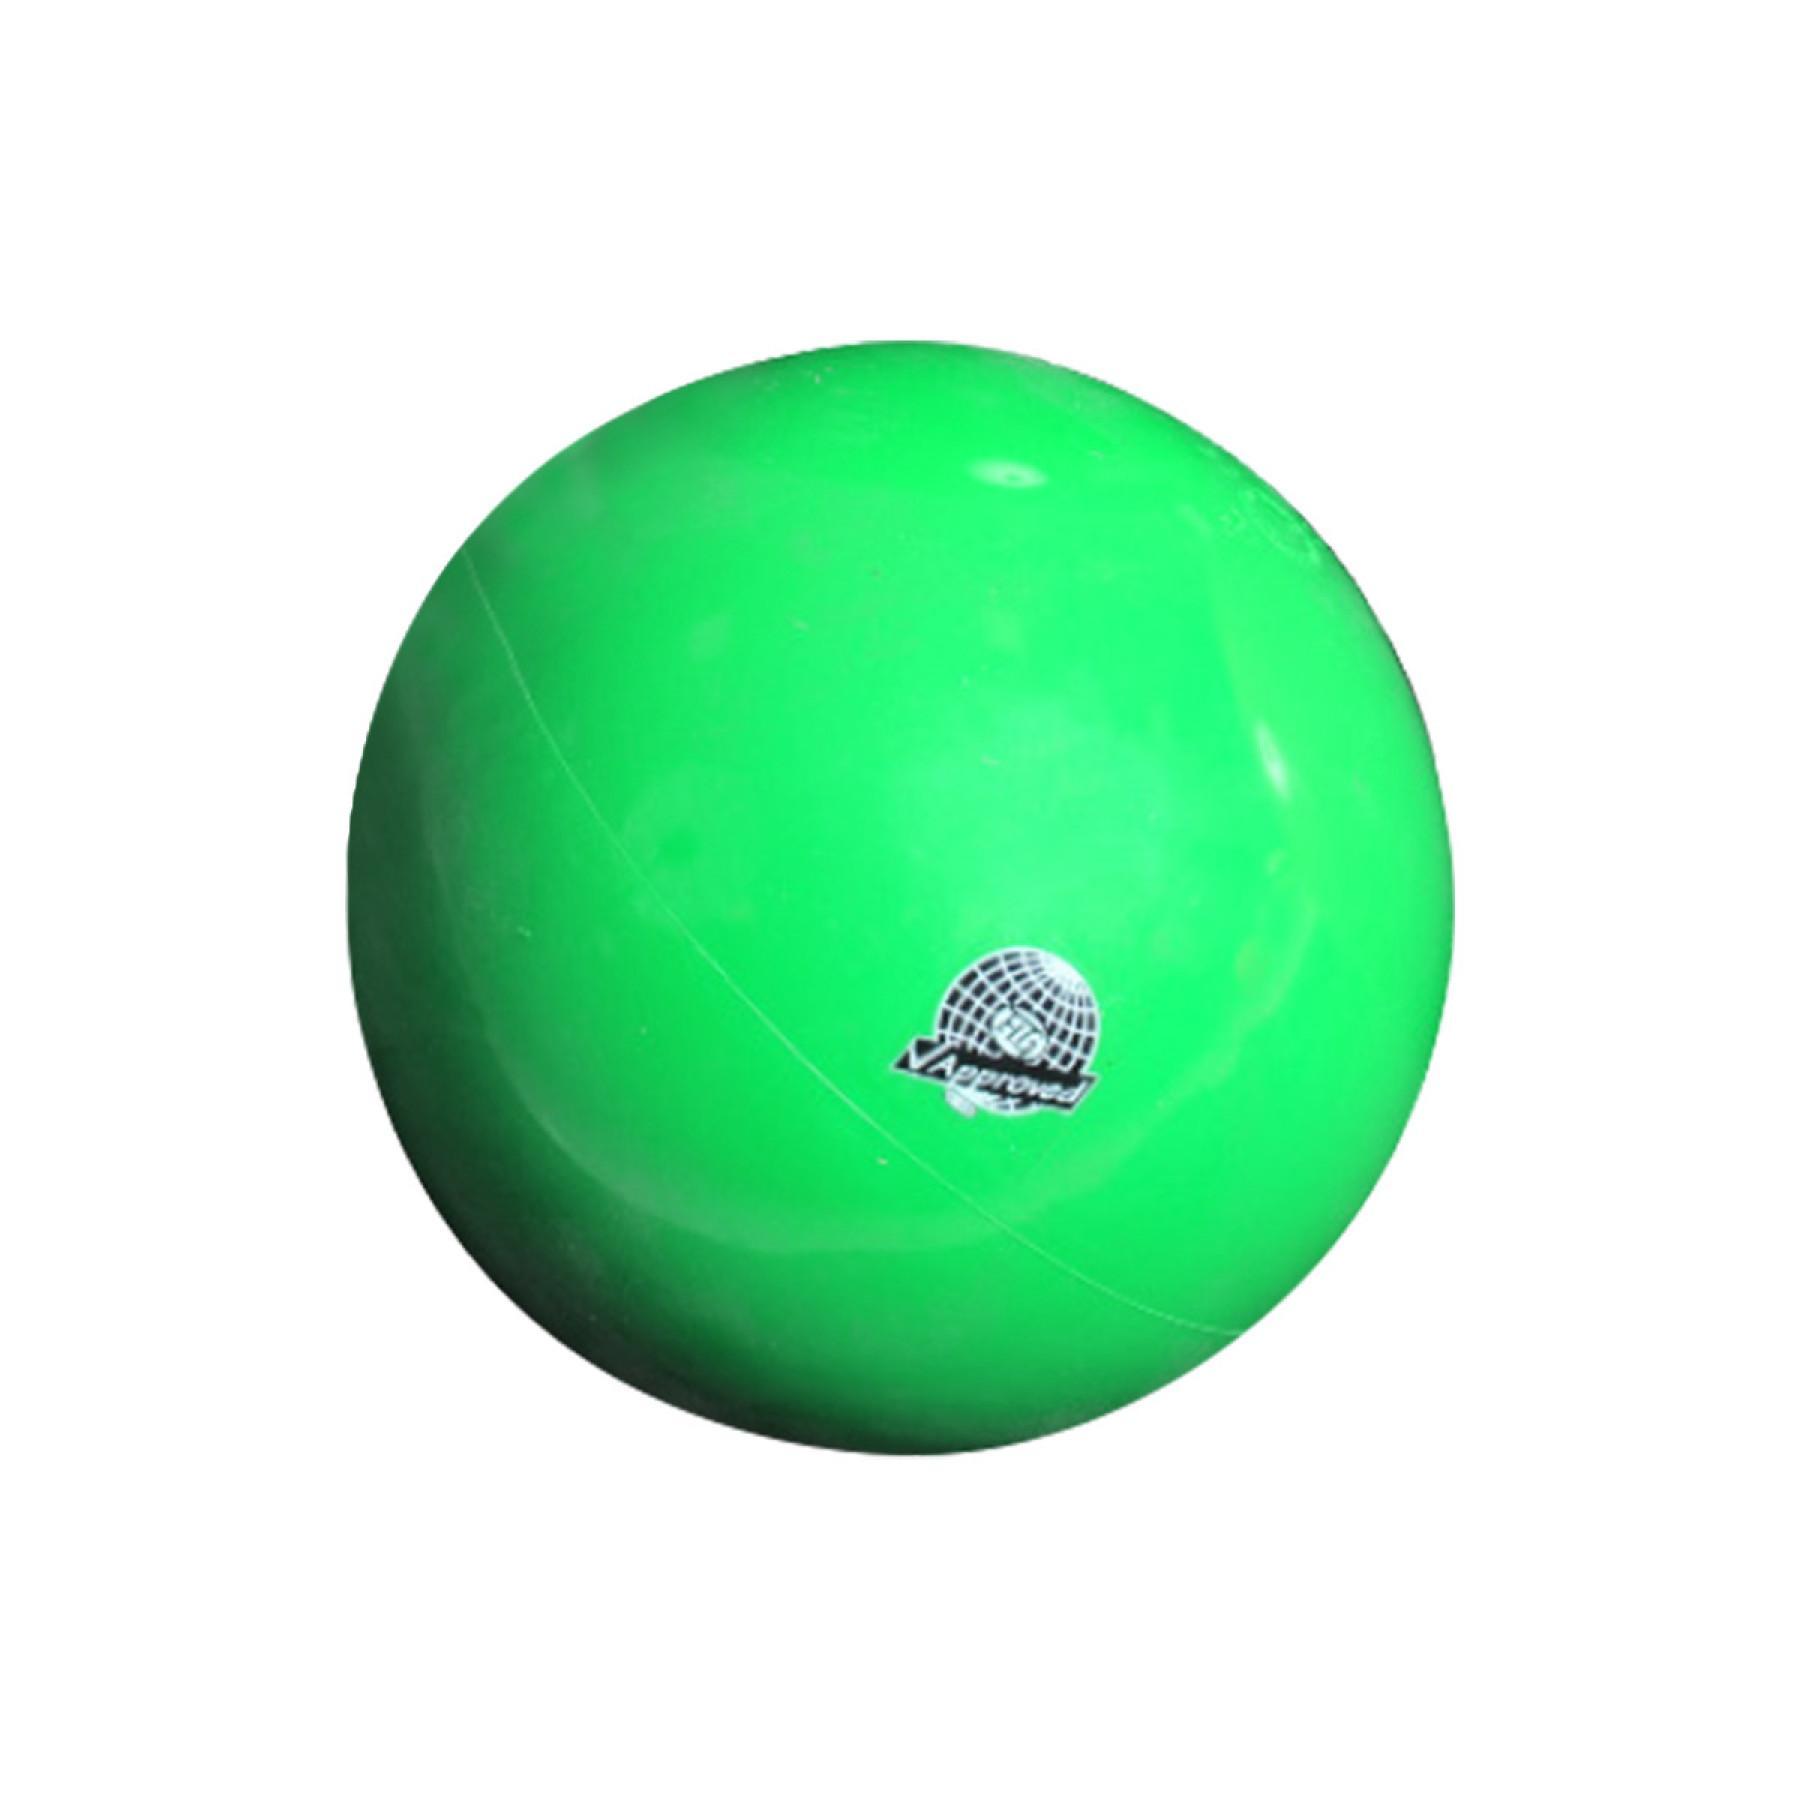 Balón entrenamiento diam 17cm/280gr Sporti France